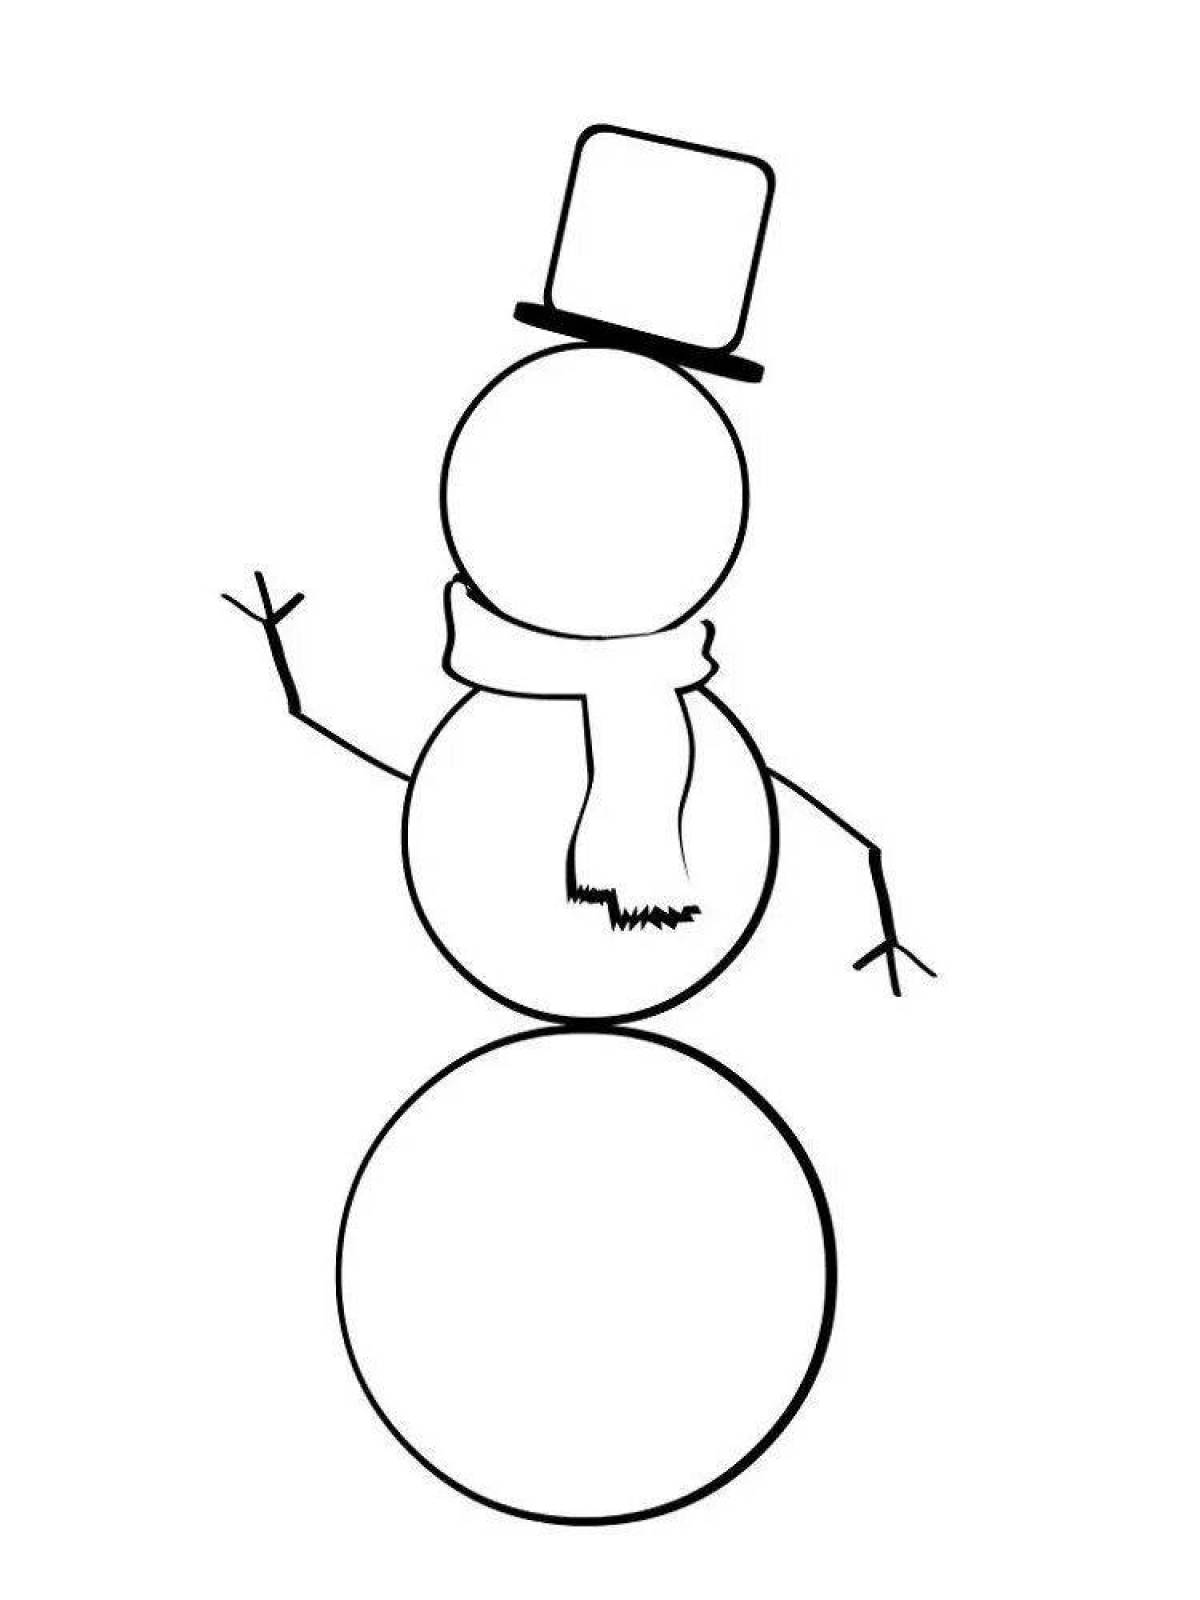 Fine snowman coloring page